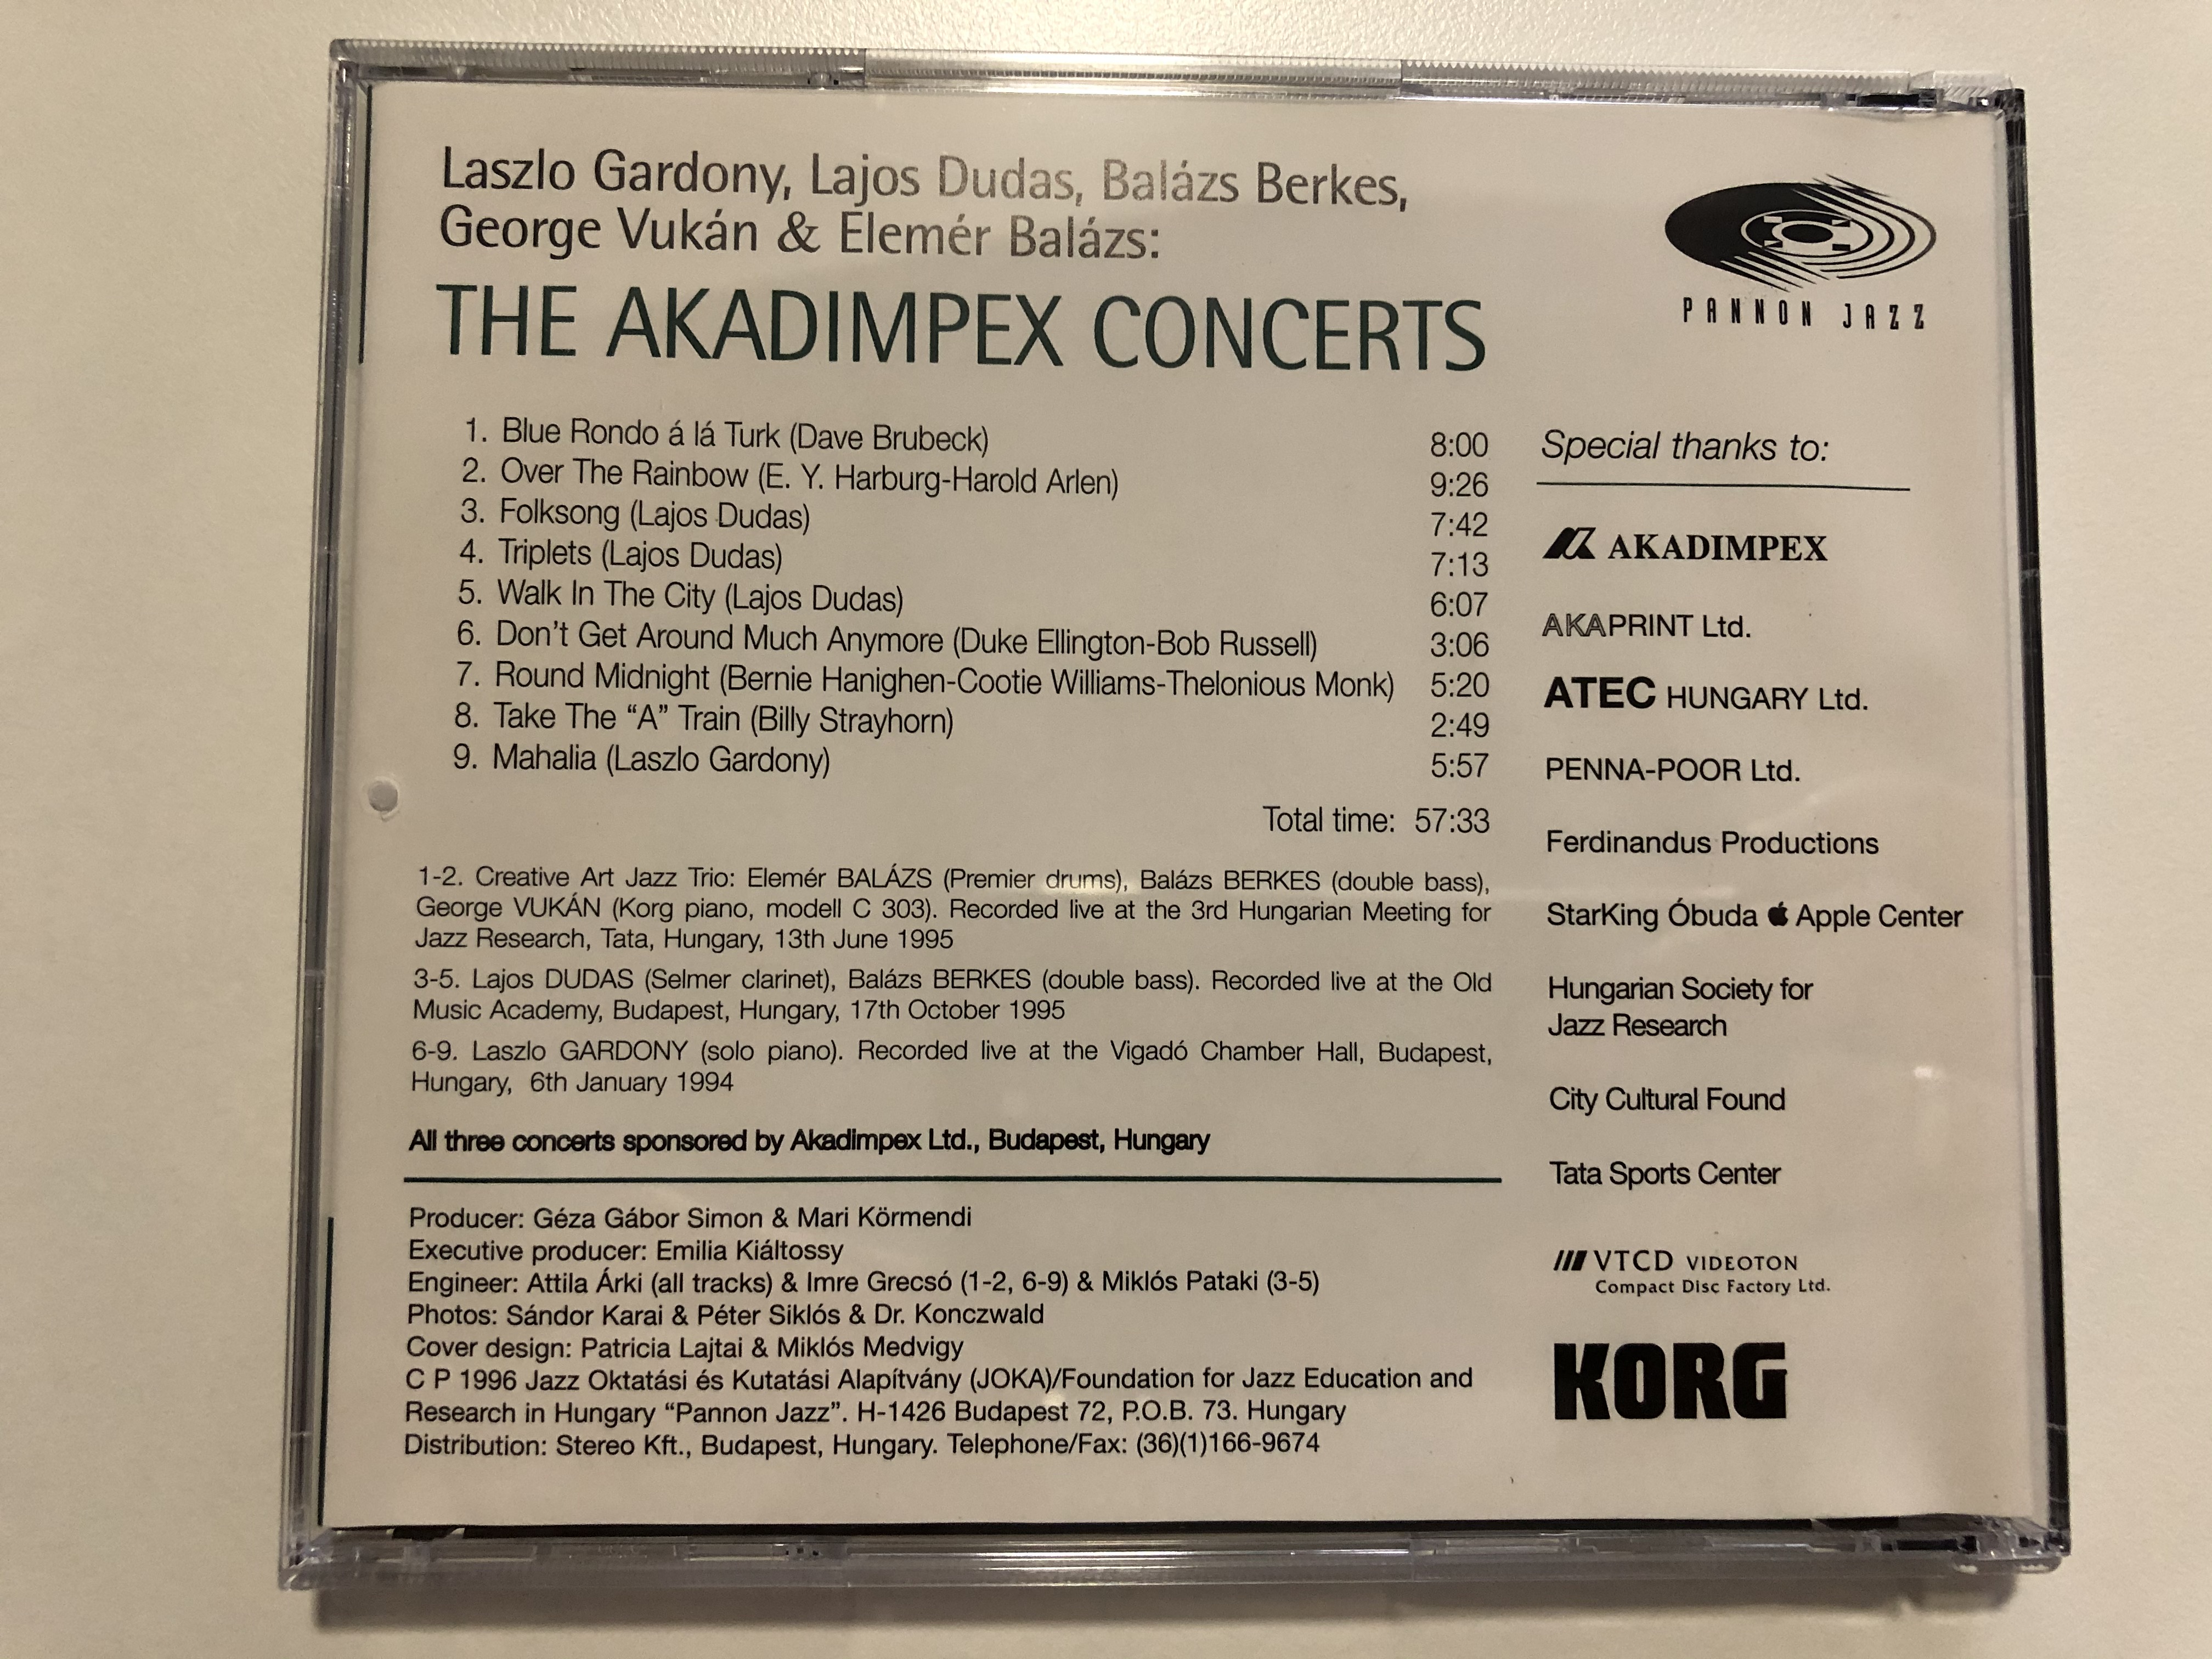 the-akadimpex-concerts-laszlo-gardony-lajos-dudas-balazs-berkes-george-vukan-elemer-balazs-foundation-for-jazz-education-and-research-in-hungary-presents-pannon-jazz-audio-cd-199.jpg